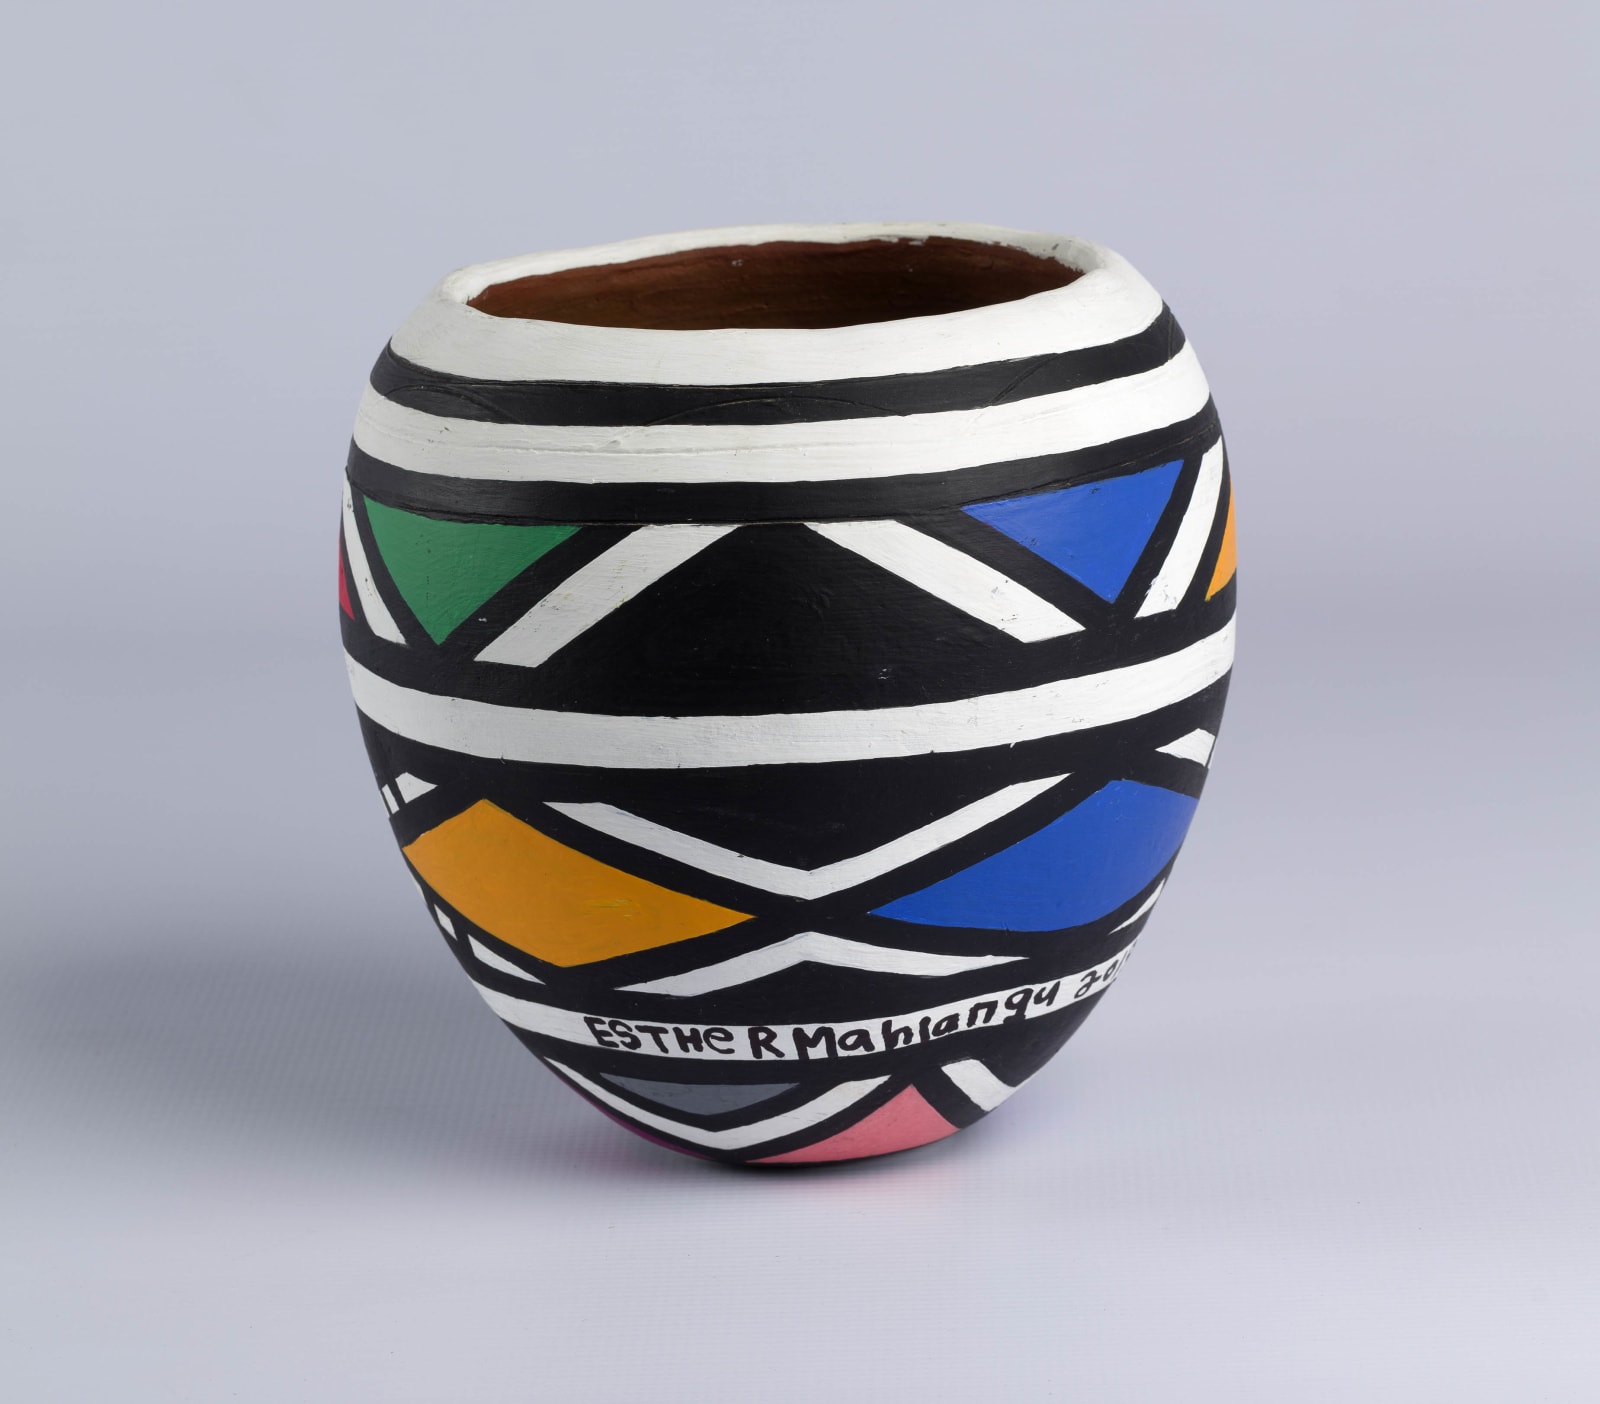 Esther Mahlangu Clay Pot 2 2019 The Melrose Gallery